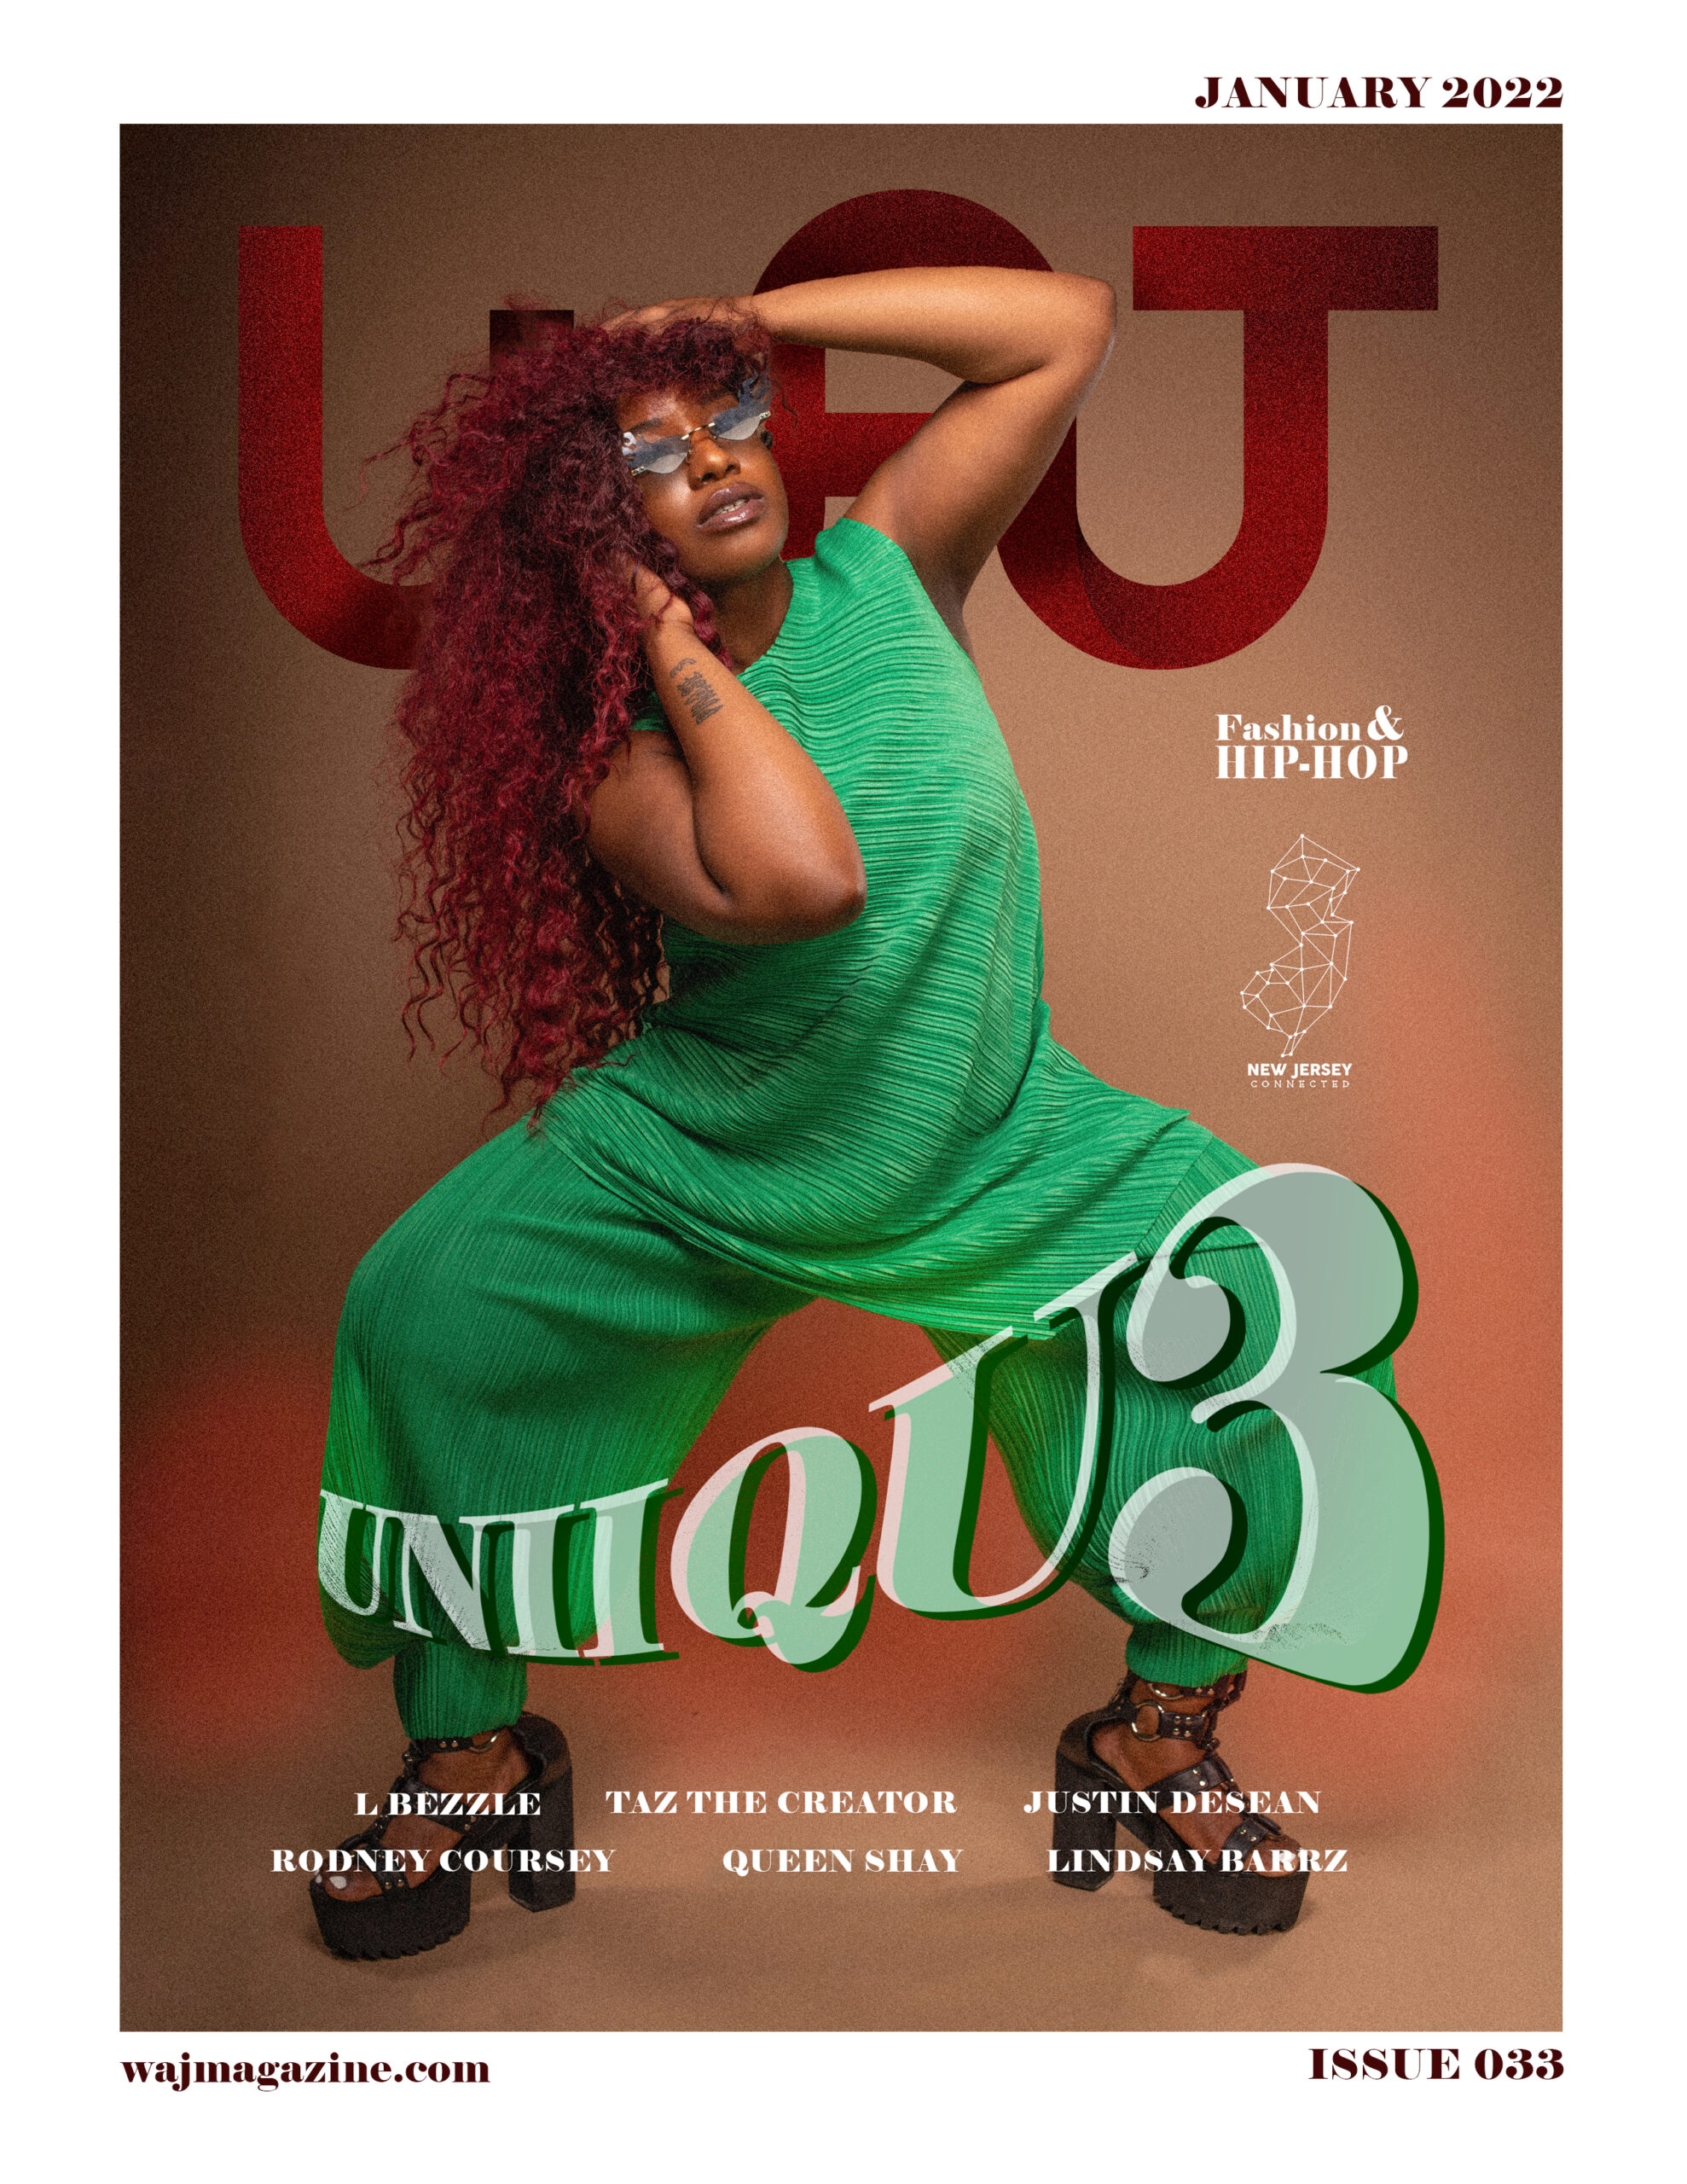 Uniiqu3 WAJ Magazine January 2022 Cover